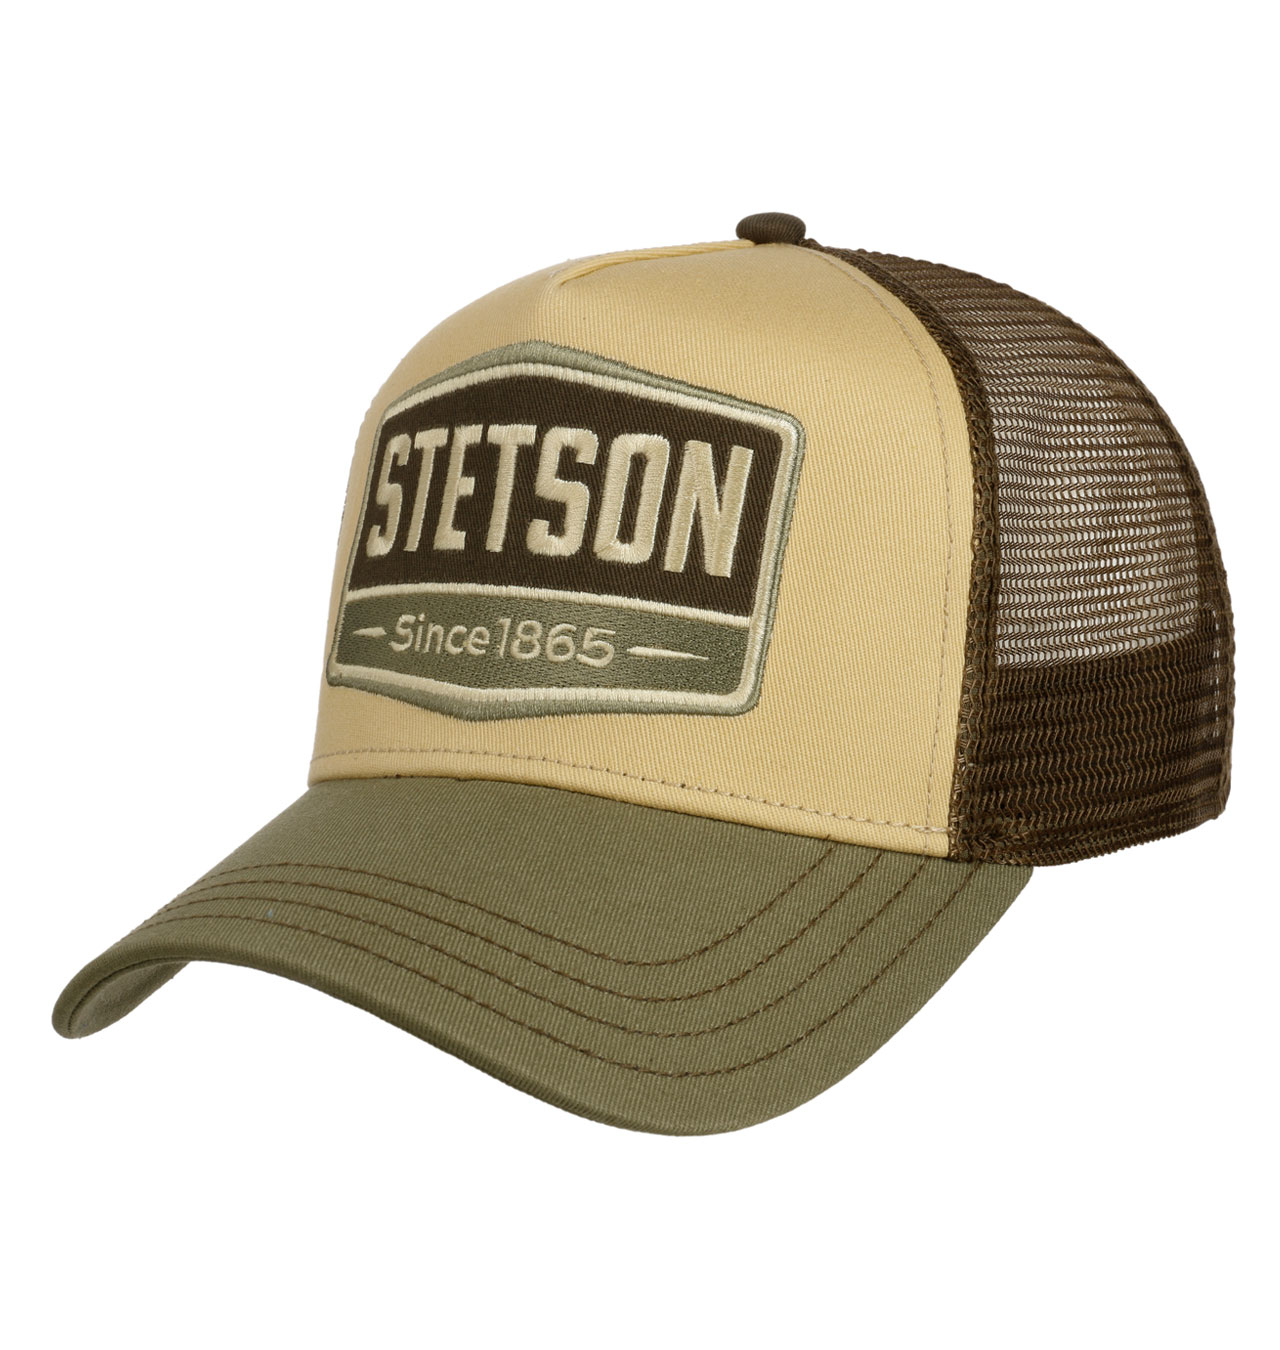 Stetson - Gasoline Trucker Cap - Khaki/Beige